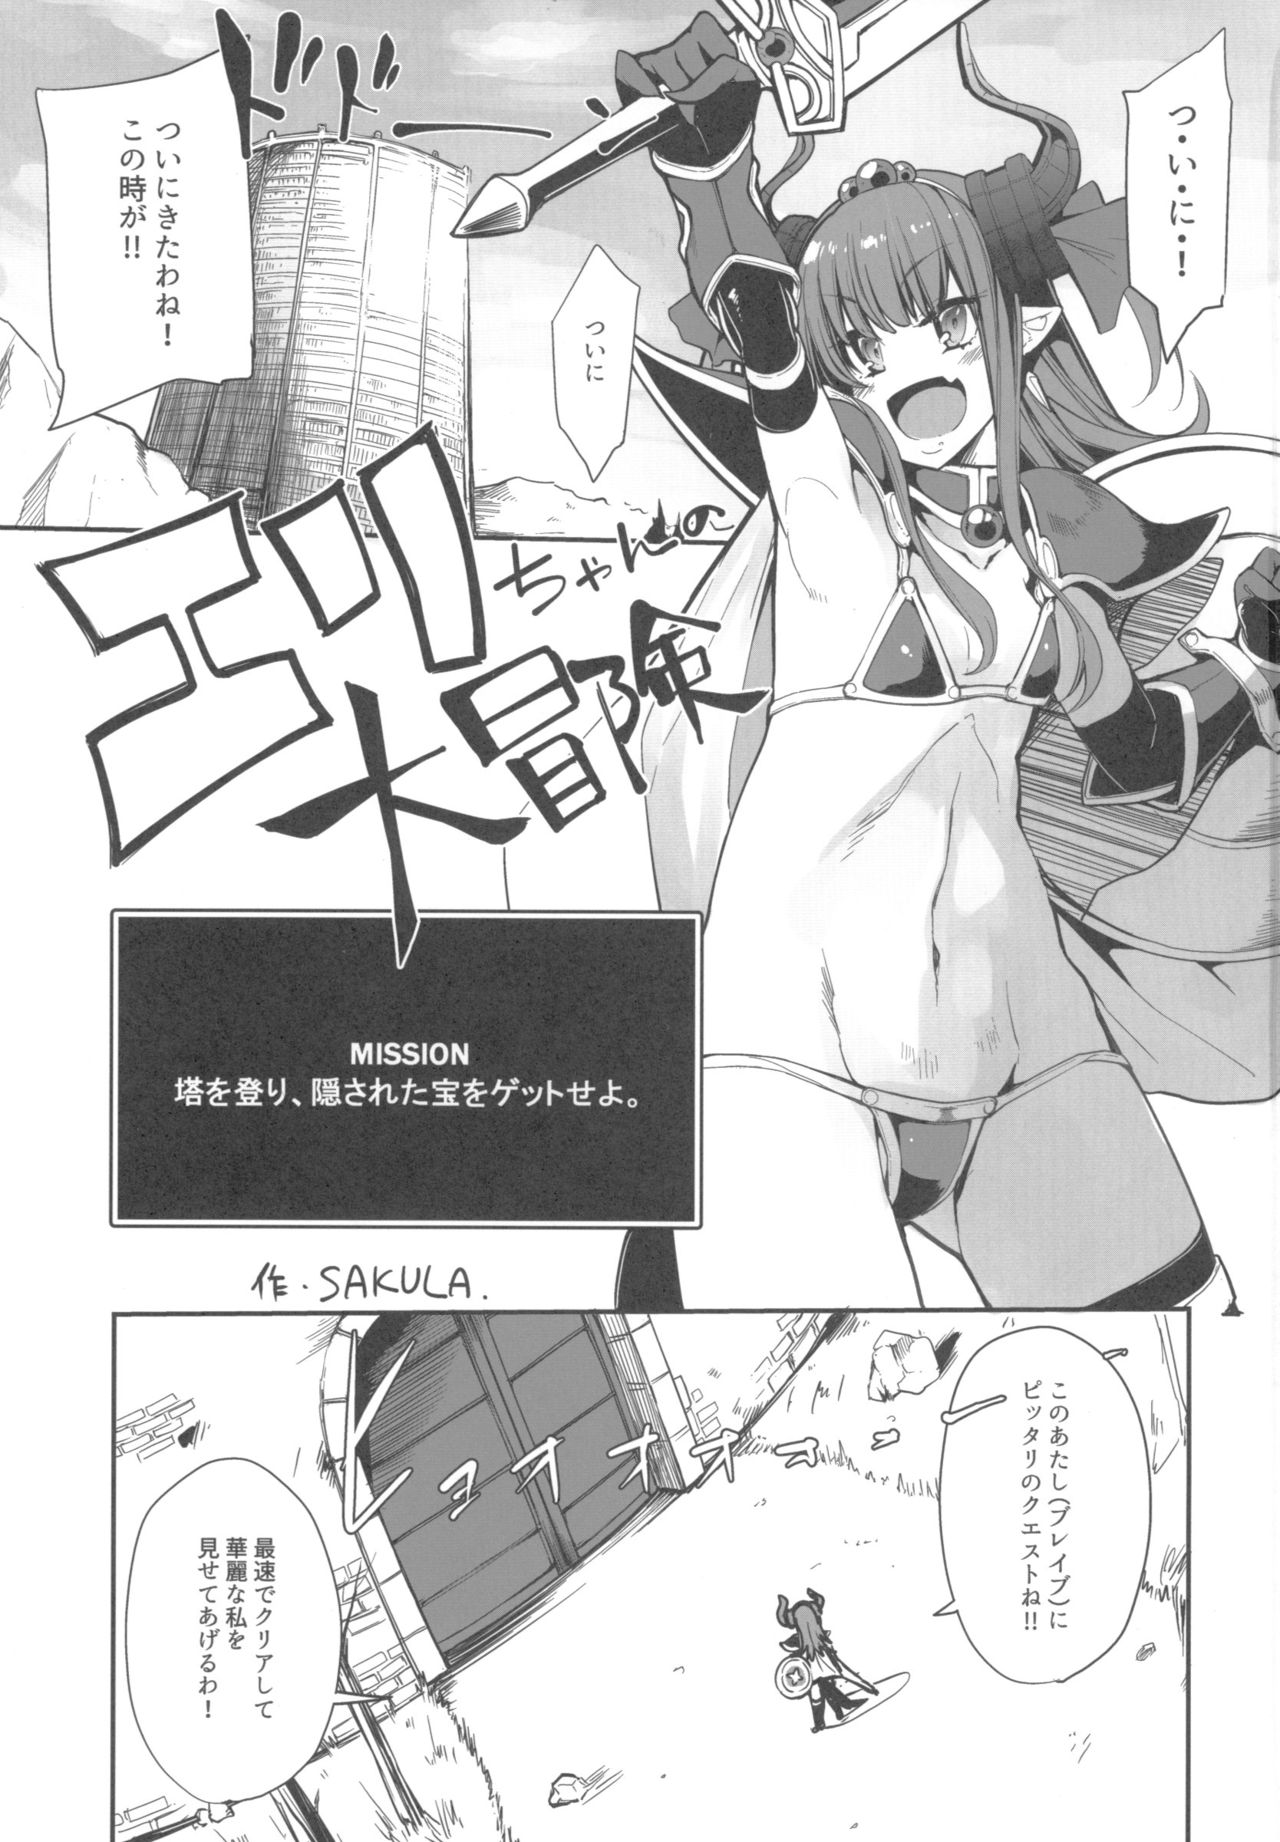 (COMIC1☆13) [IRON GRIMOIRE (SAKULA)] エリちゃんの大冒険 (Fate/Grand Order)